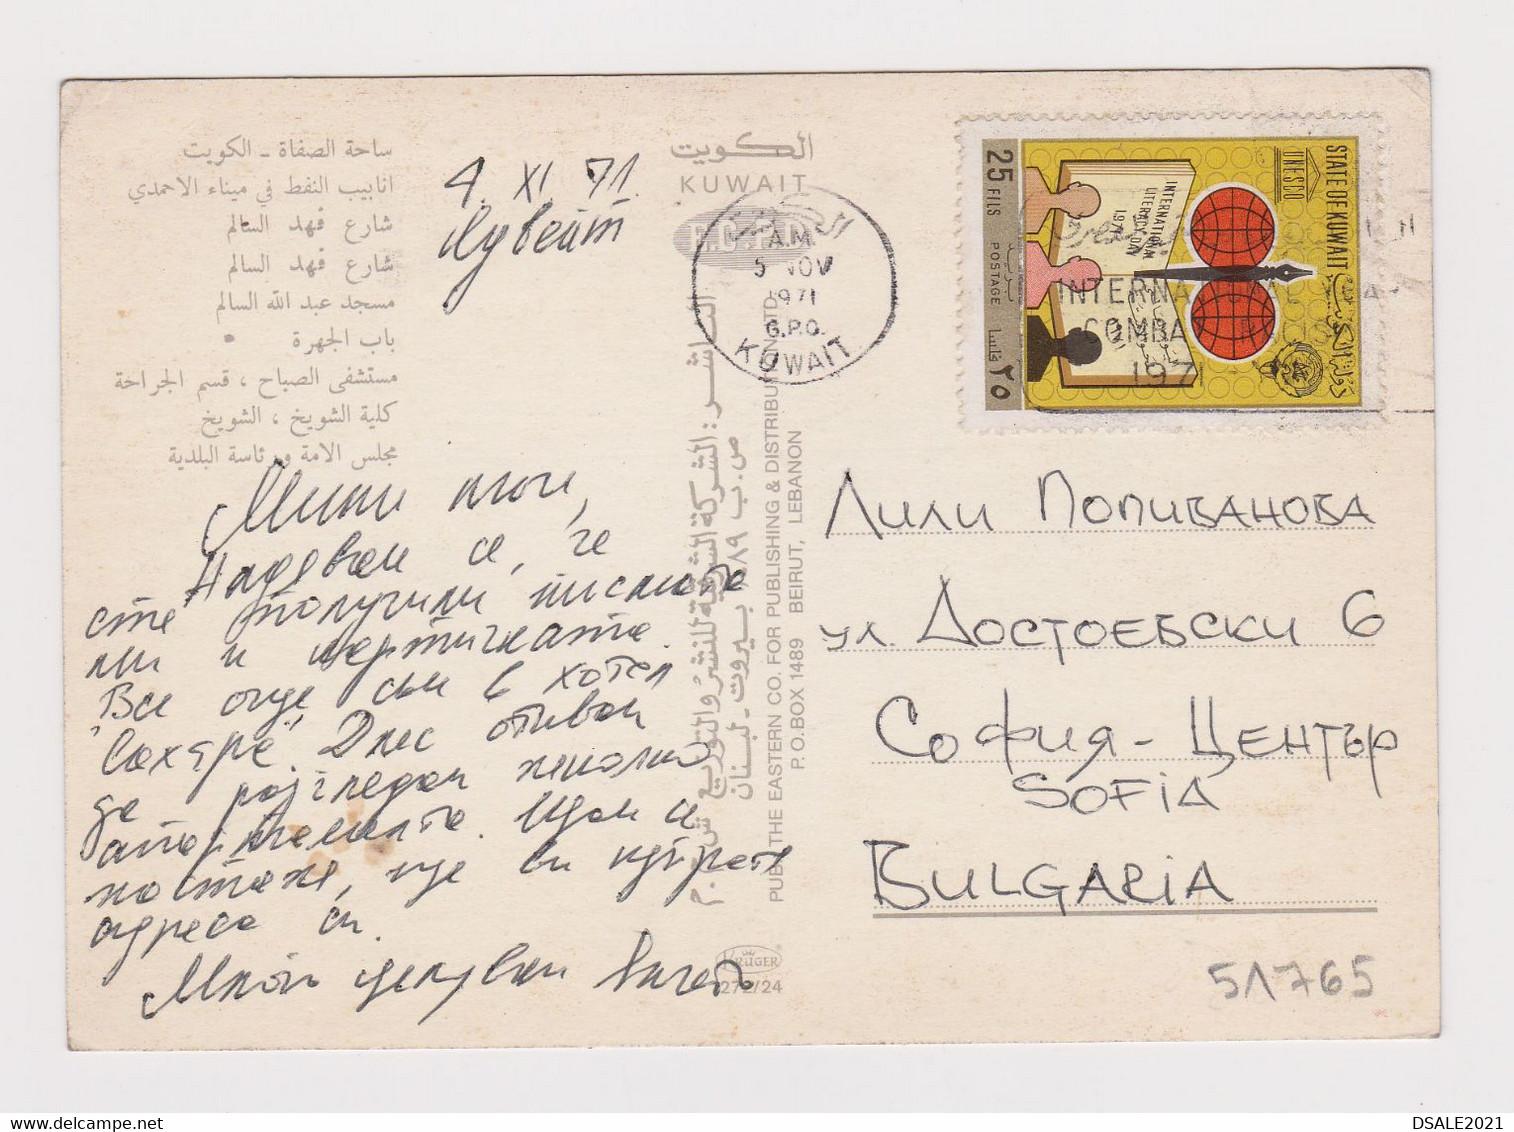 KUWAIT Vintage 1970s Multi View Photo Postcard CPA W/Nice Stamp To Bulgaria (51765) - Kuwait